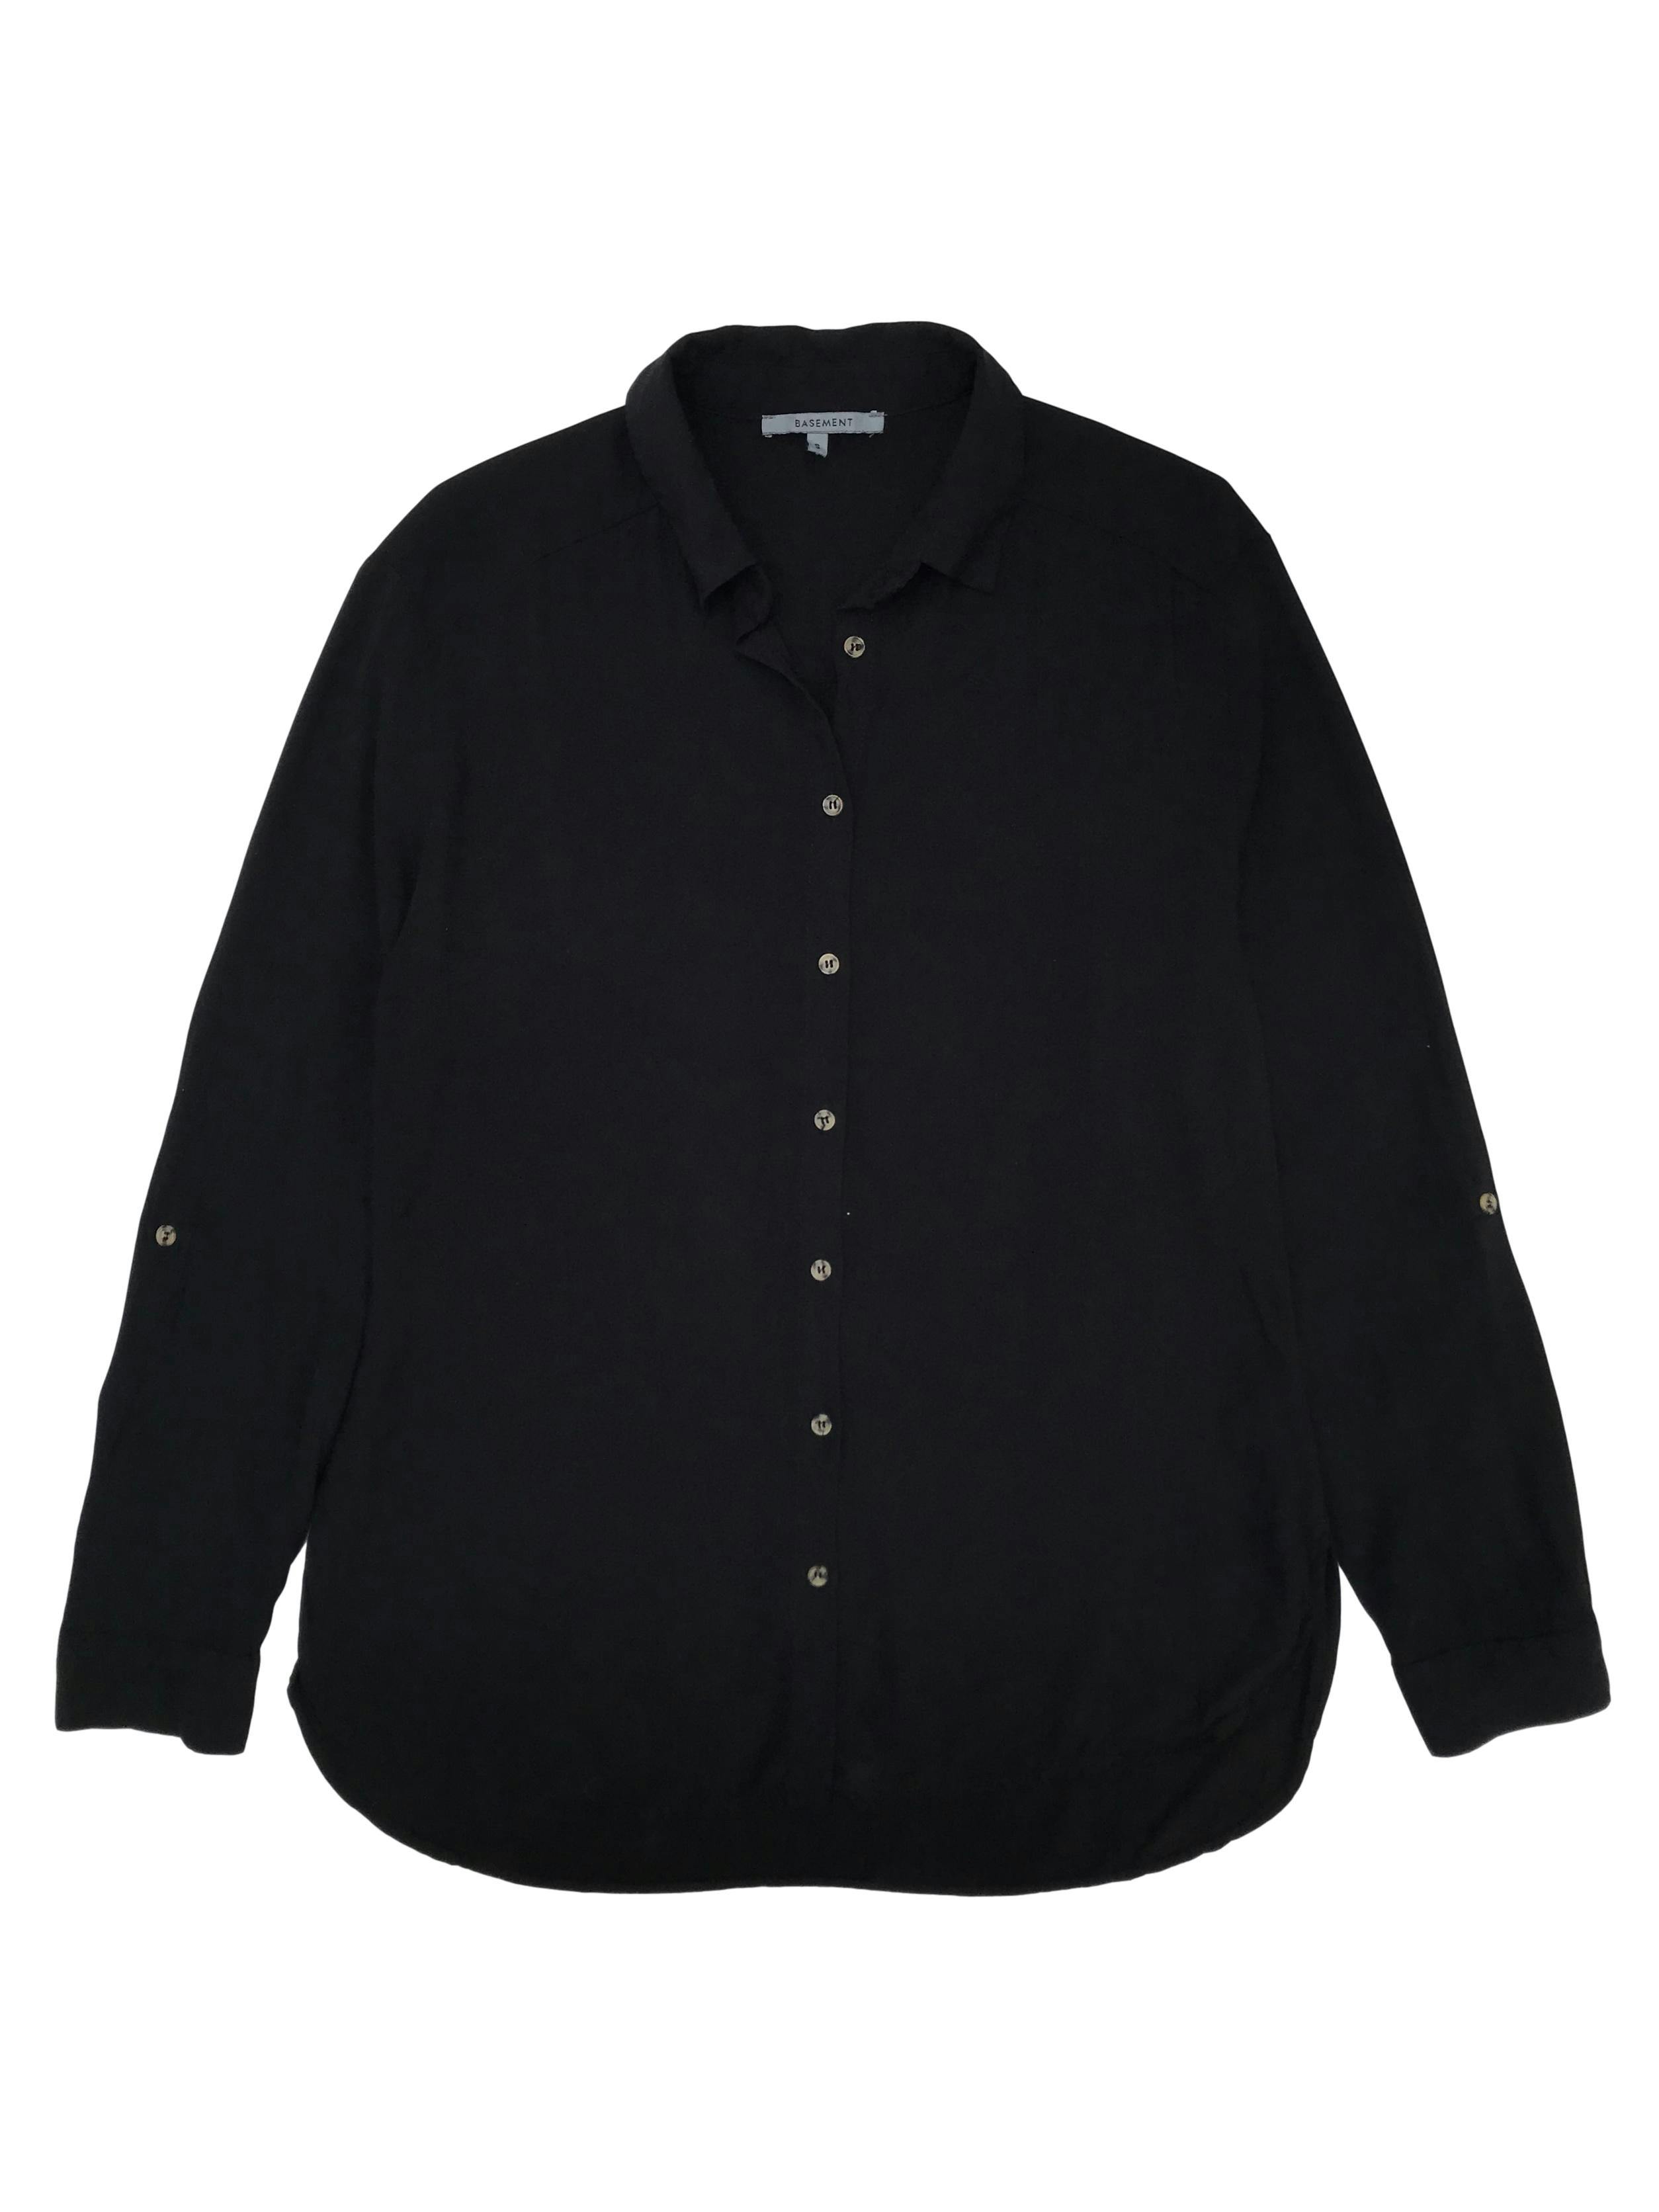 Blusa Basement negra de viscosa, camisera, manga larga regulable con botón, basta más larga atrás. Largo 60 - 65cm